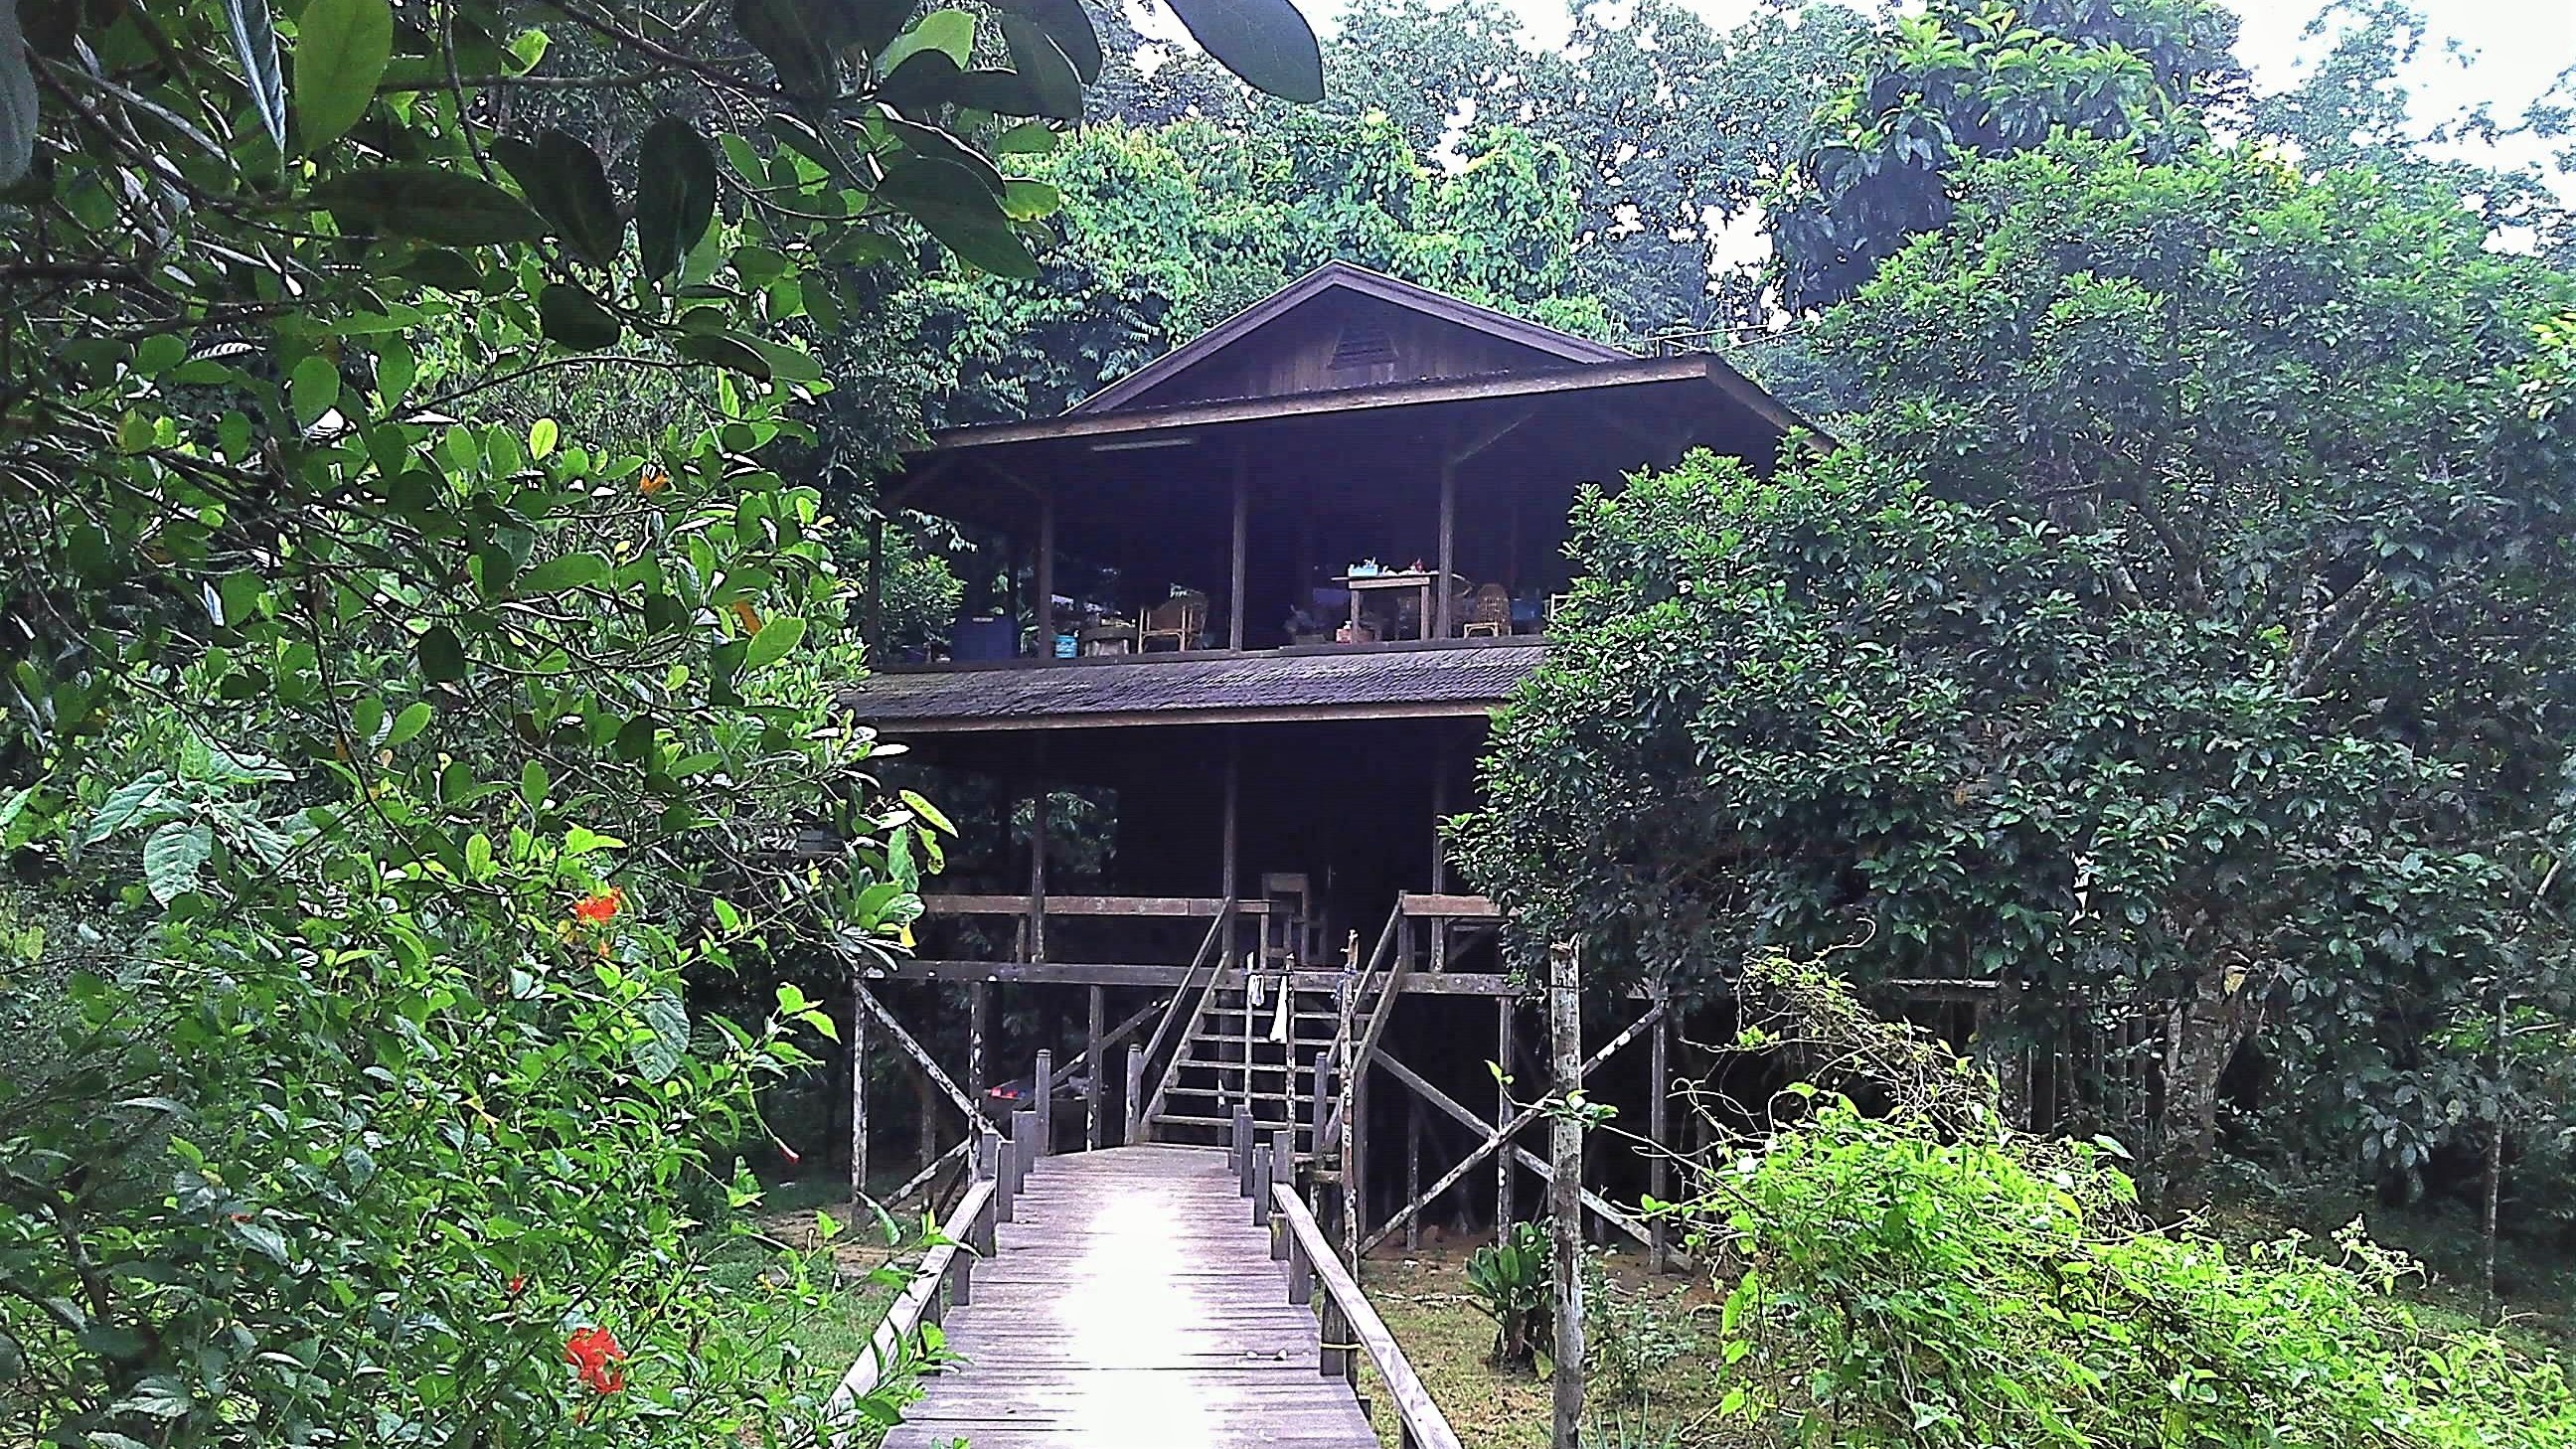 kutai park orangutan jungle rain forest experience trip tours kalimantan Indonesia